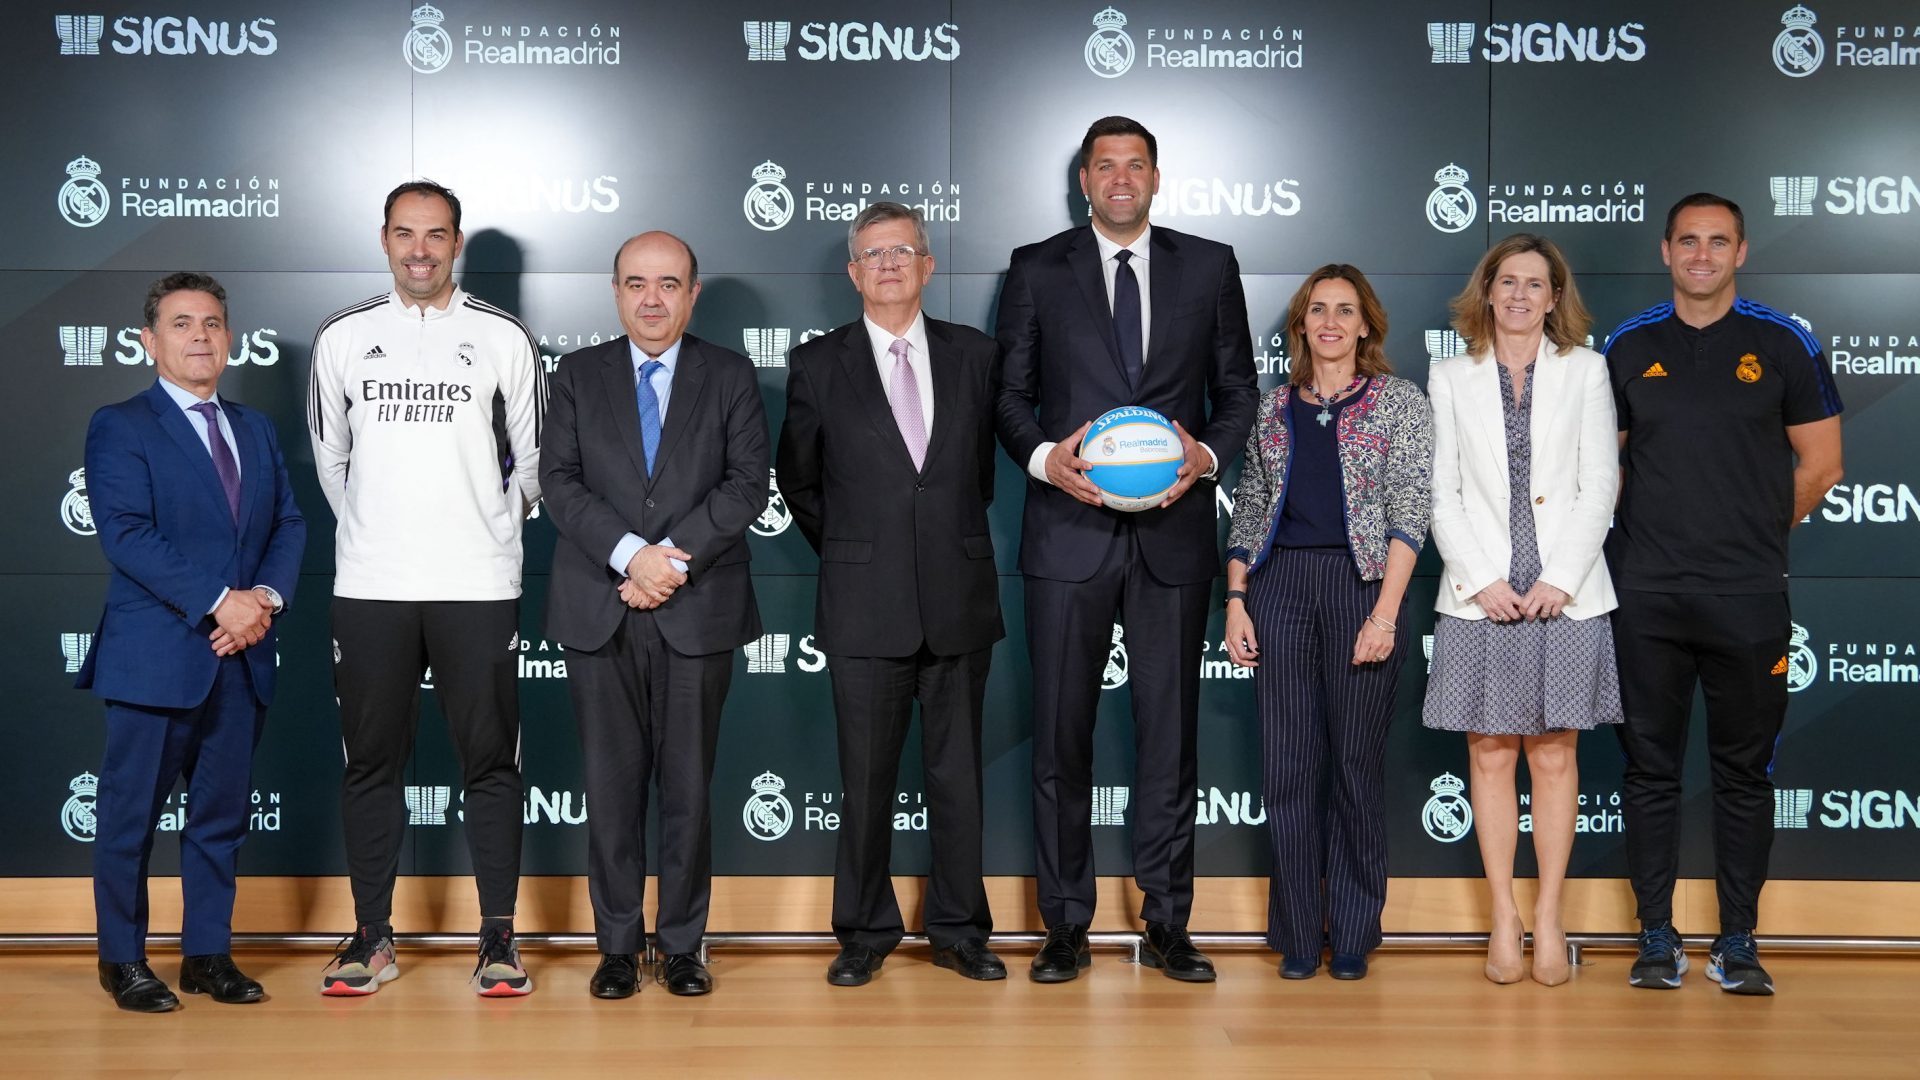 Signus Real Madrid Foundation